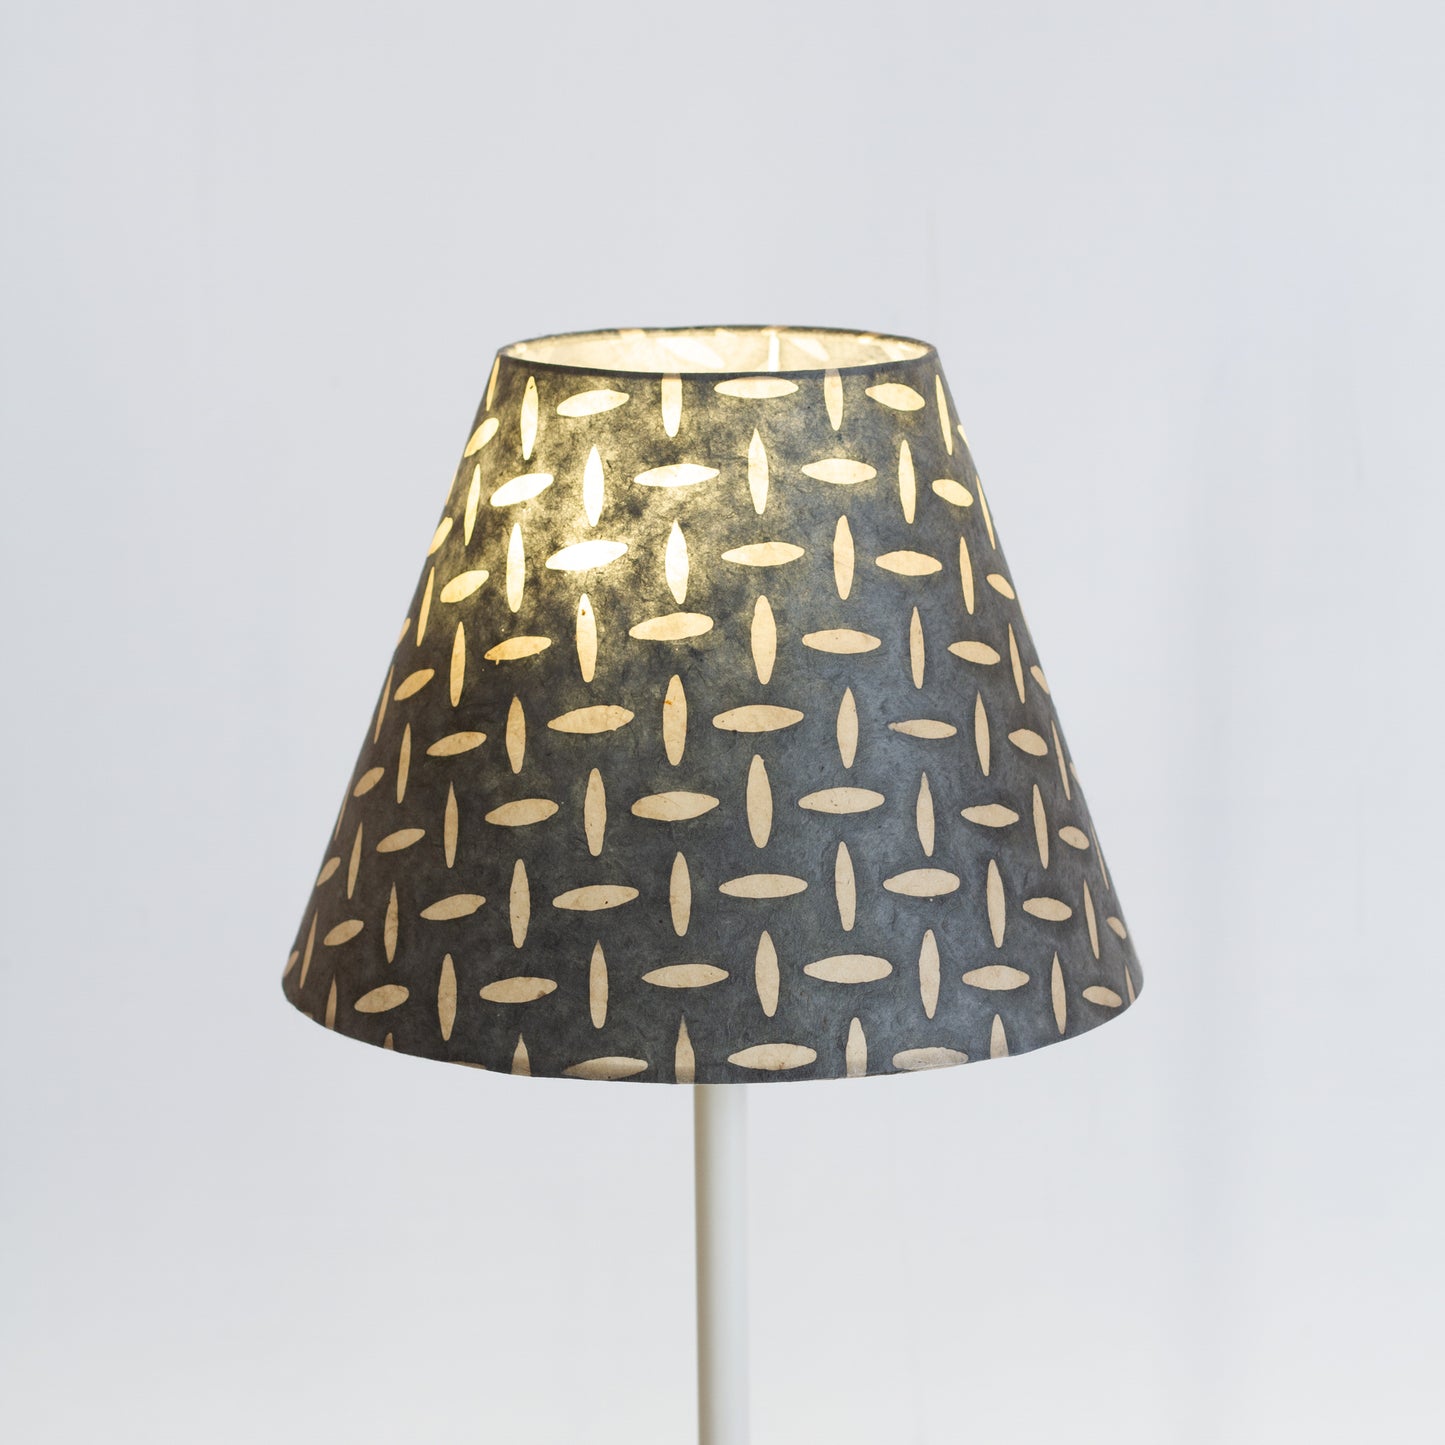 Conical Lamp Shade P88 ~ Batik Tread Plate Grey, 15cm(top) x 30cm(bottom) x 22cm(height)